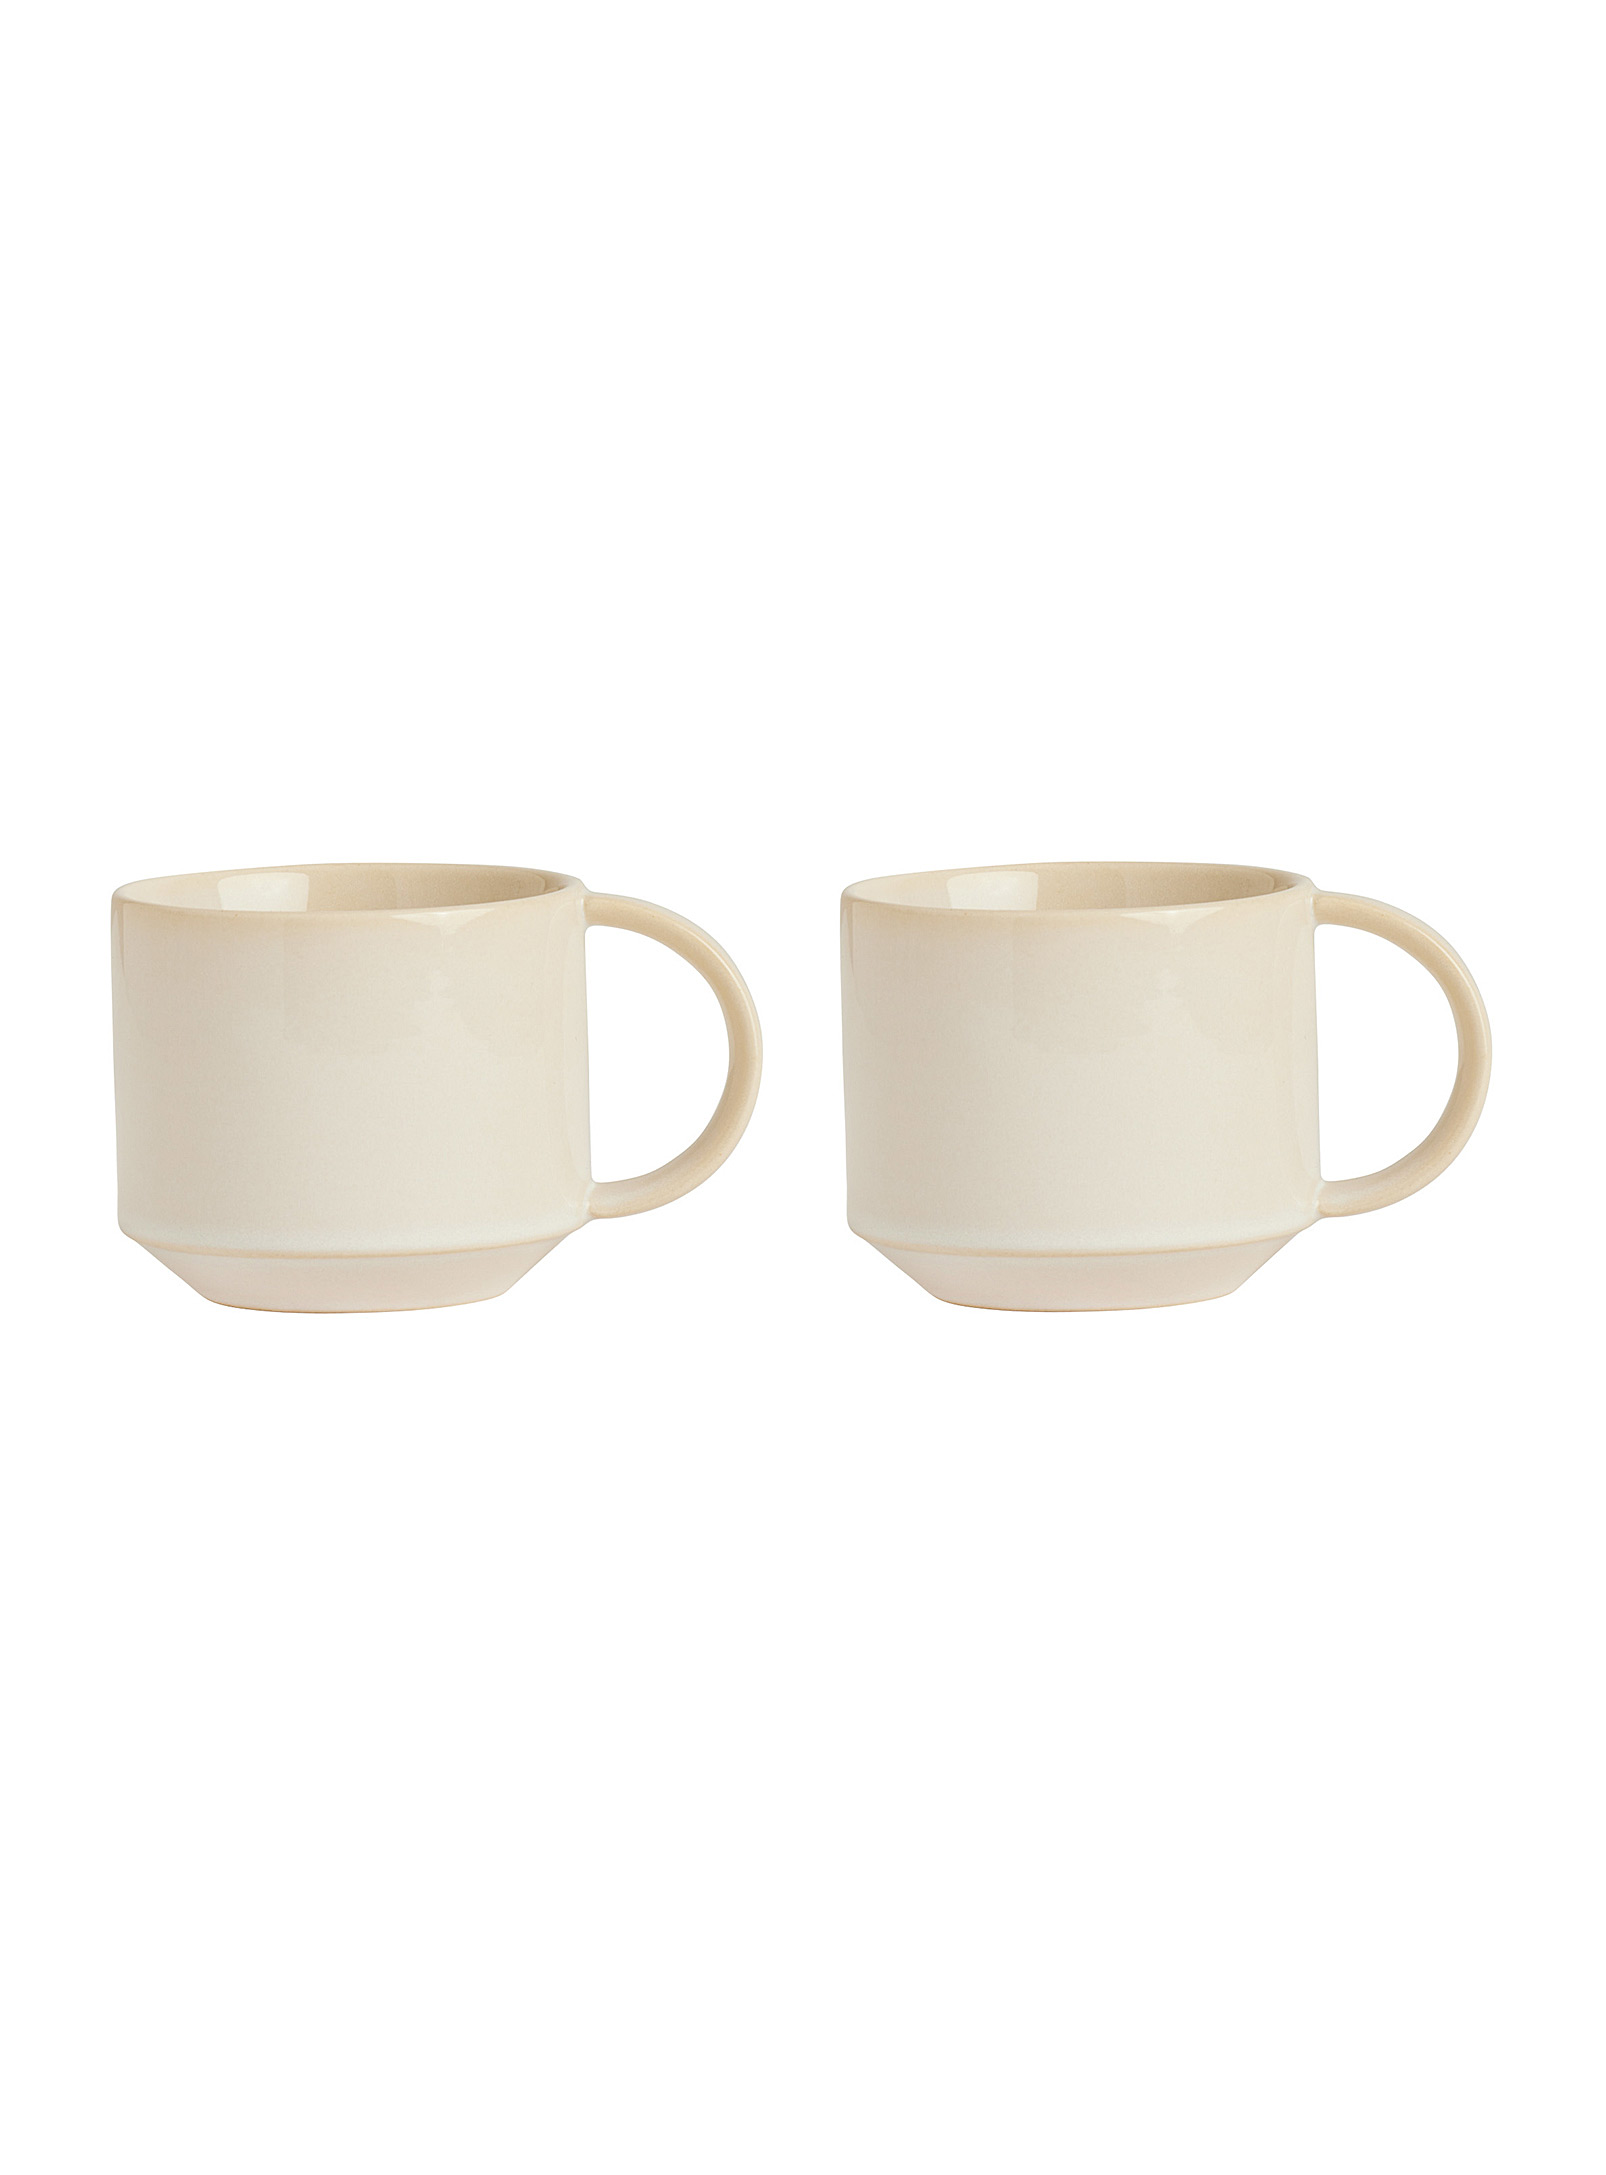 Oyoy Living Design Terracotta Geometric Artisanal Cups Set Of 2 In Ivory White